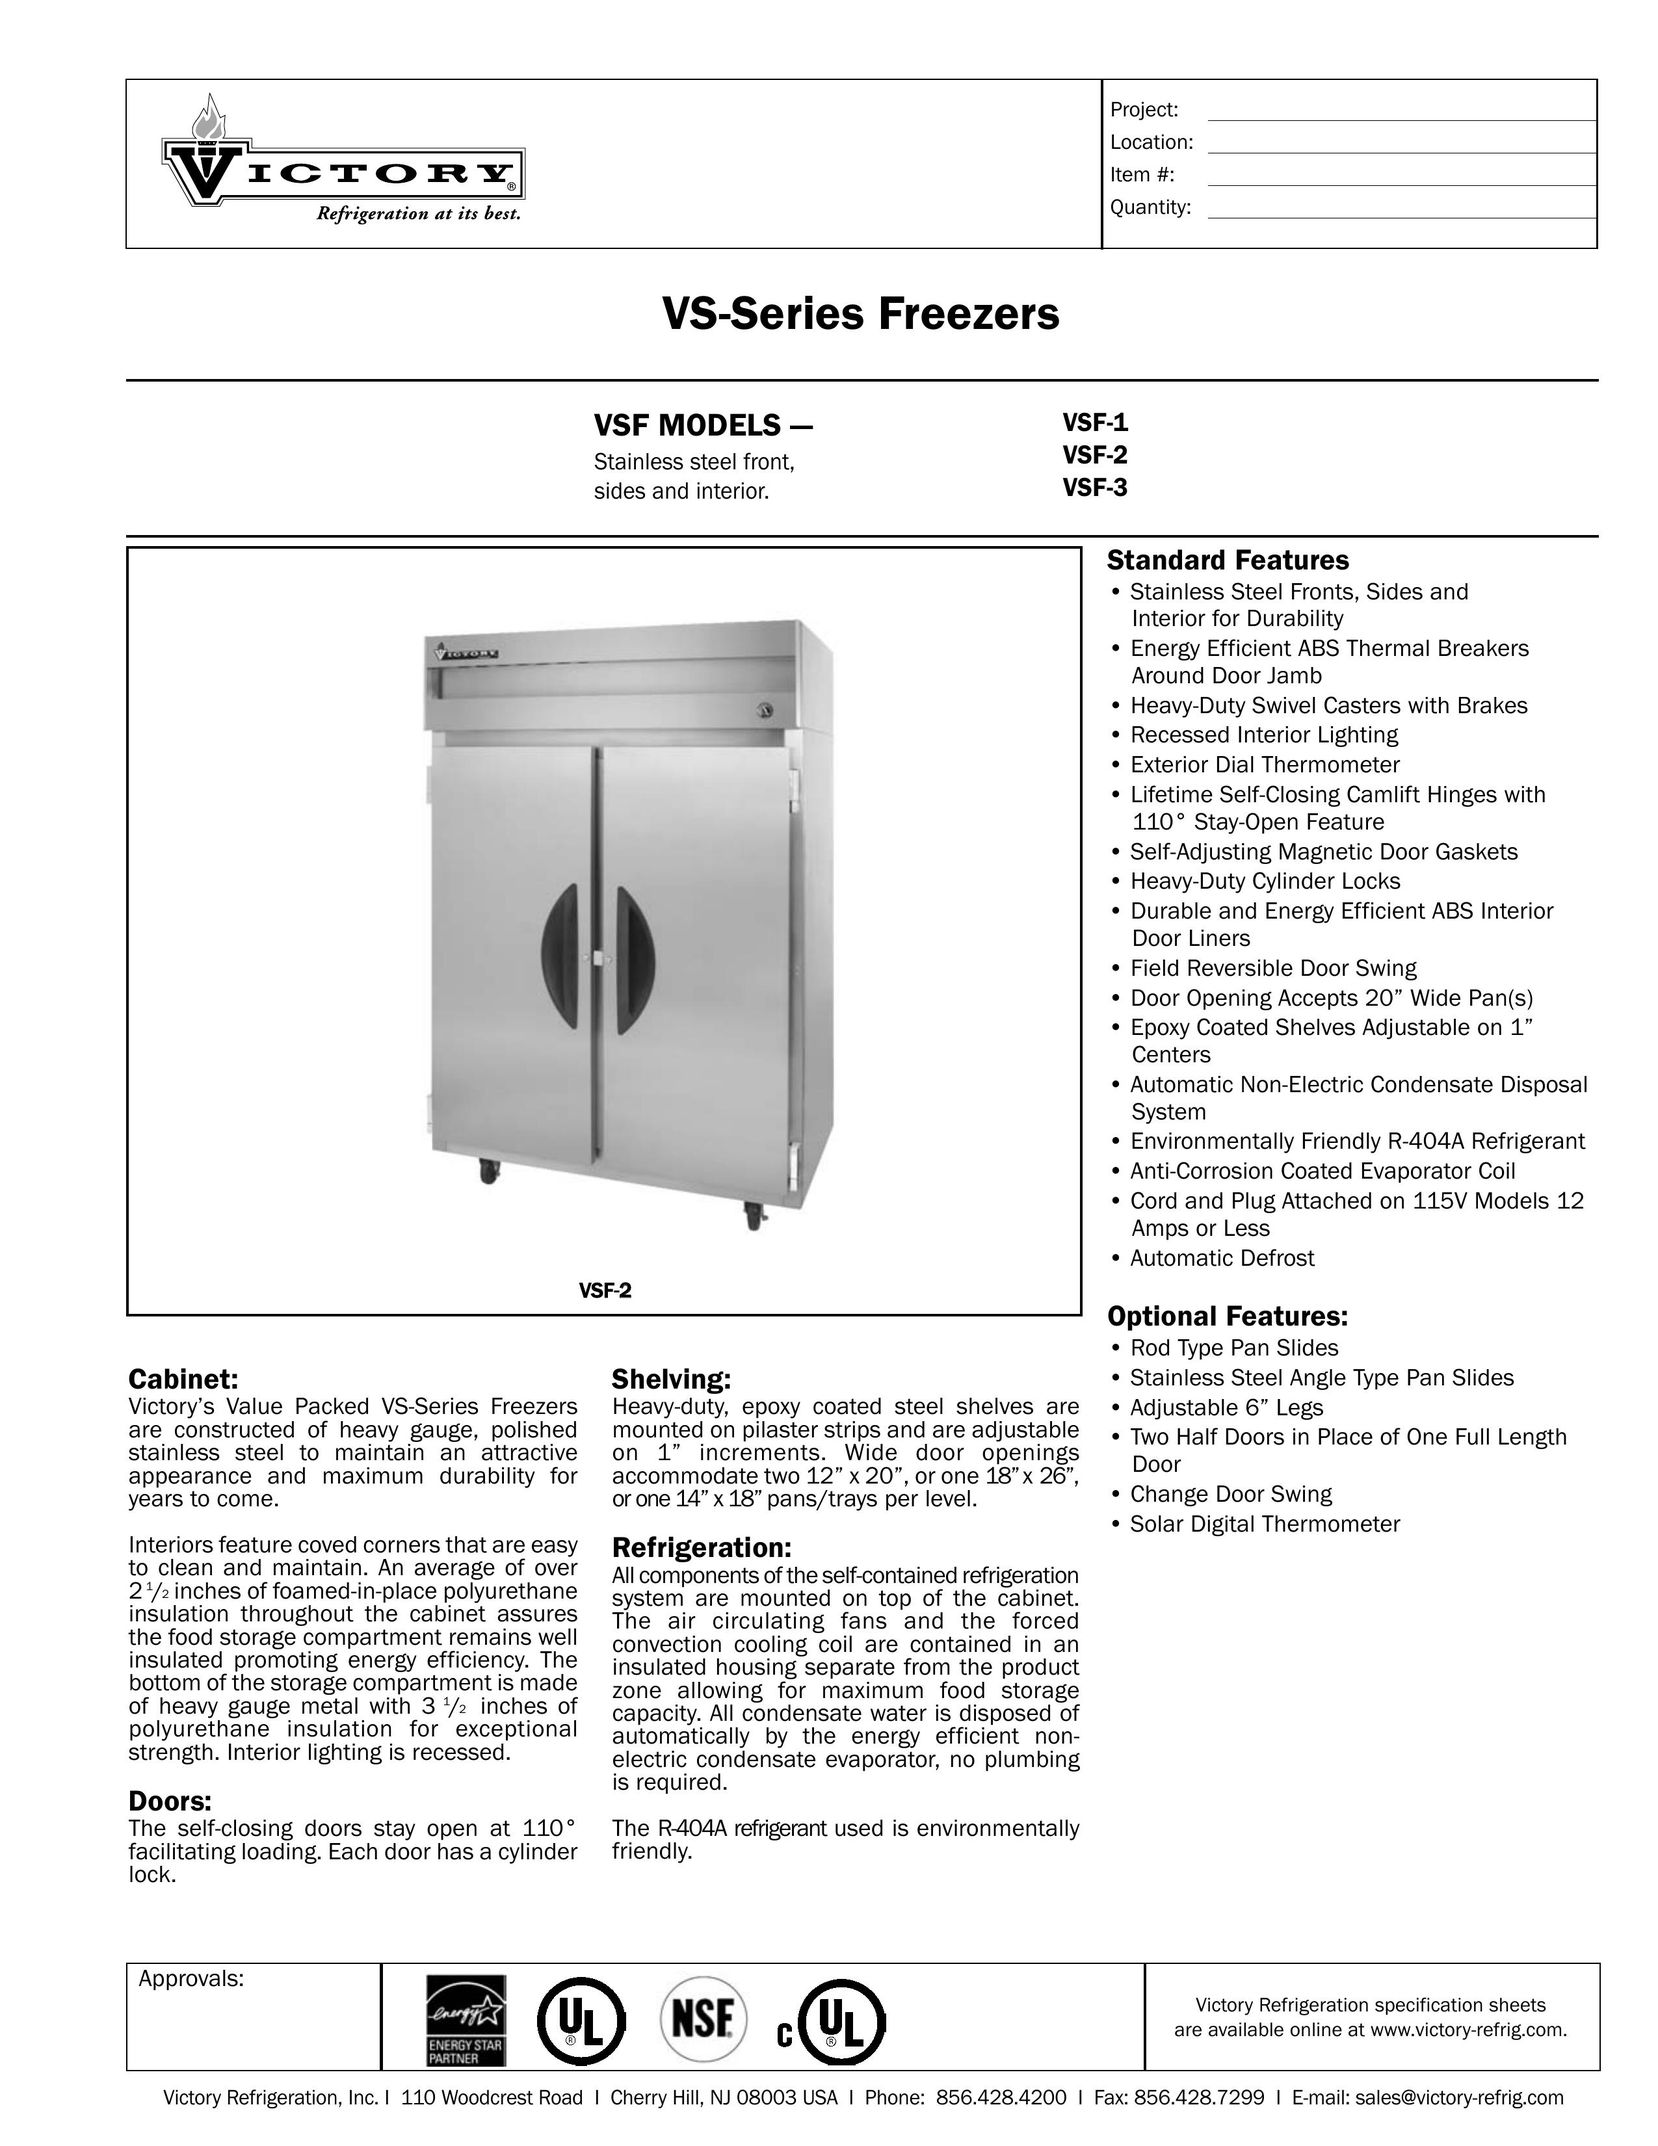 Victory Refrigeration VSF-1 Freezer User Manual